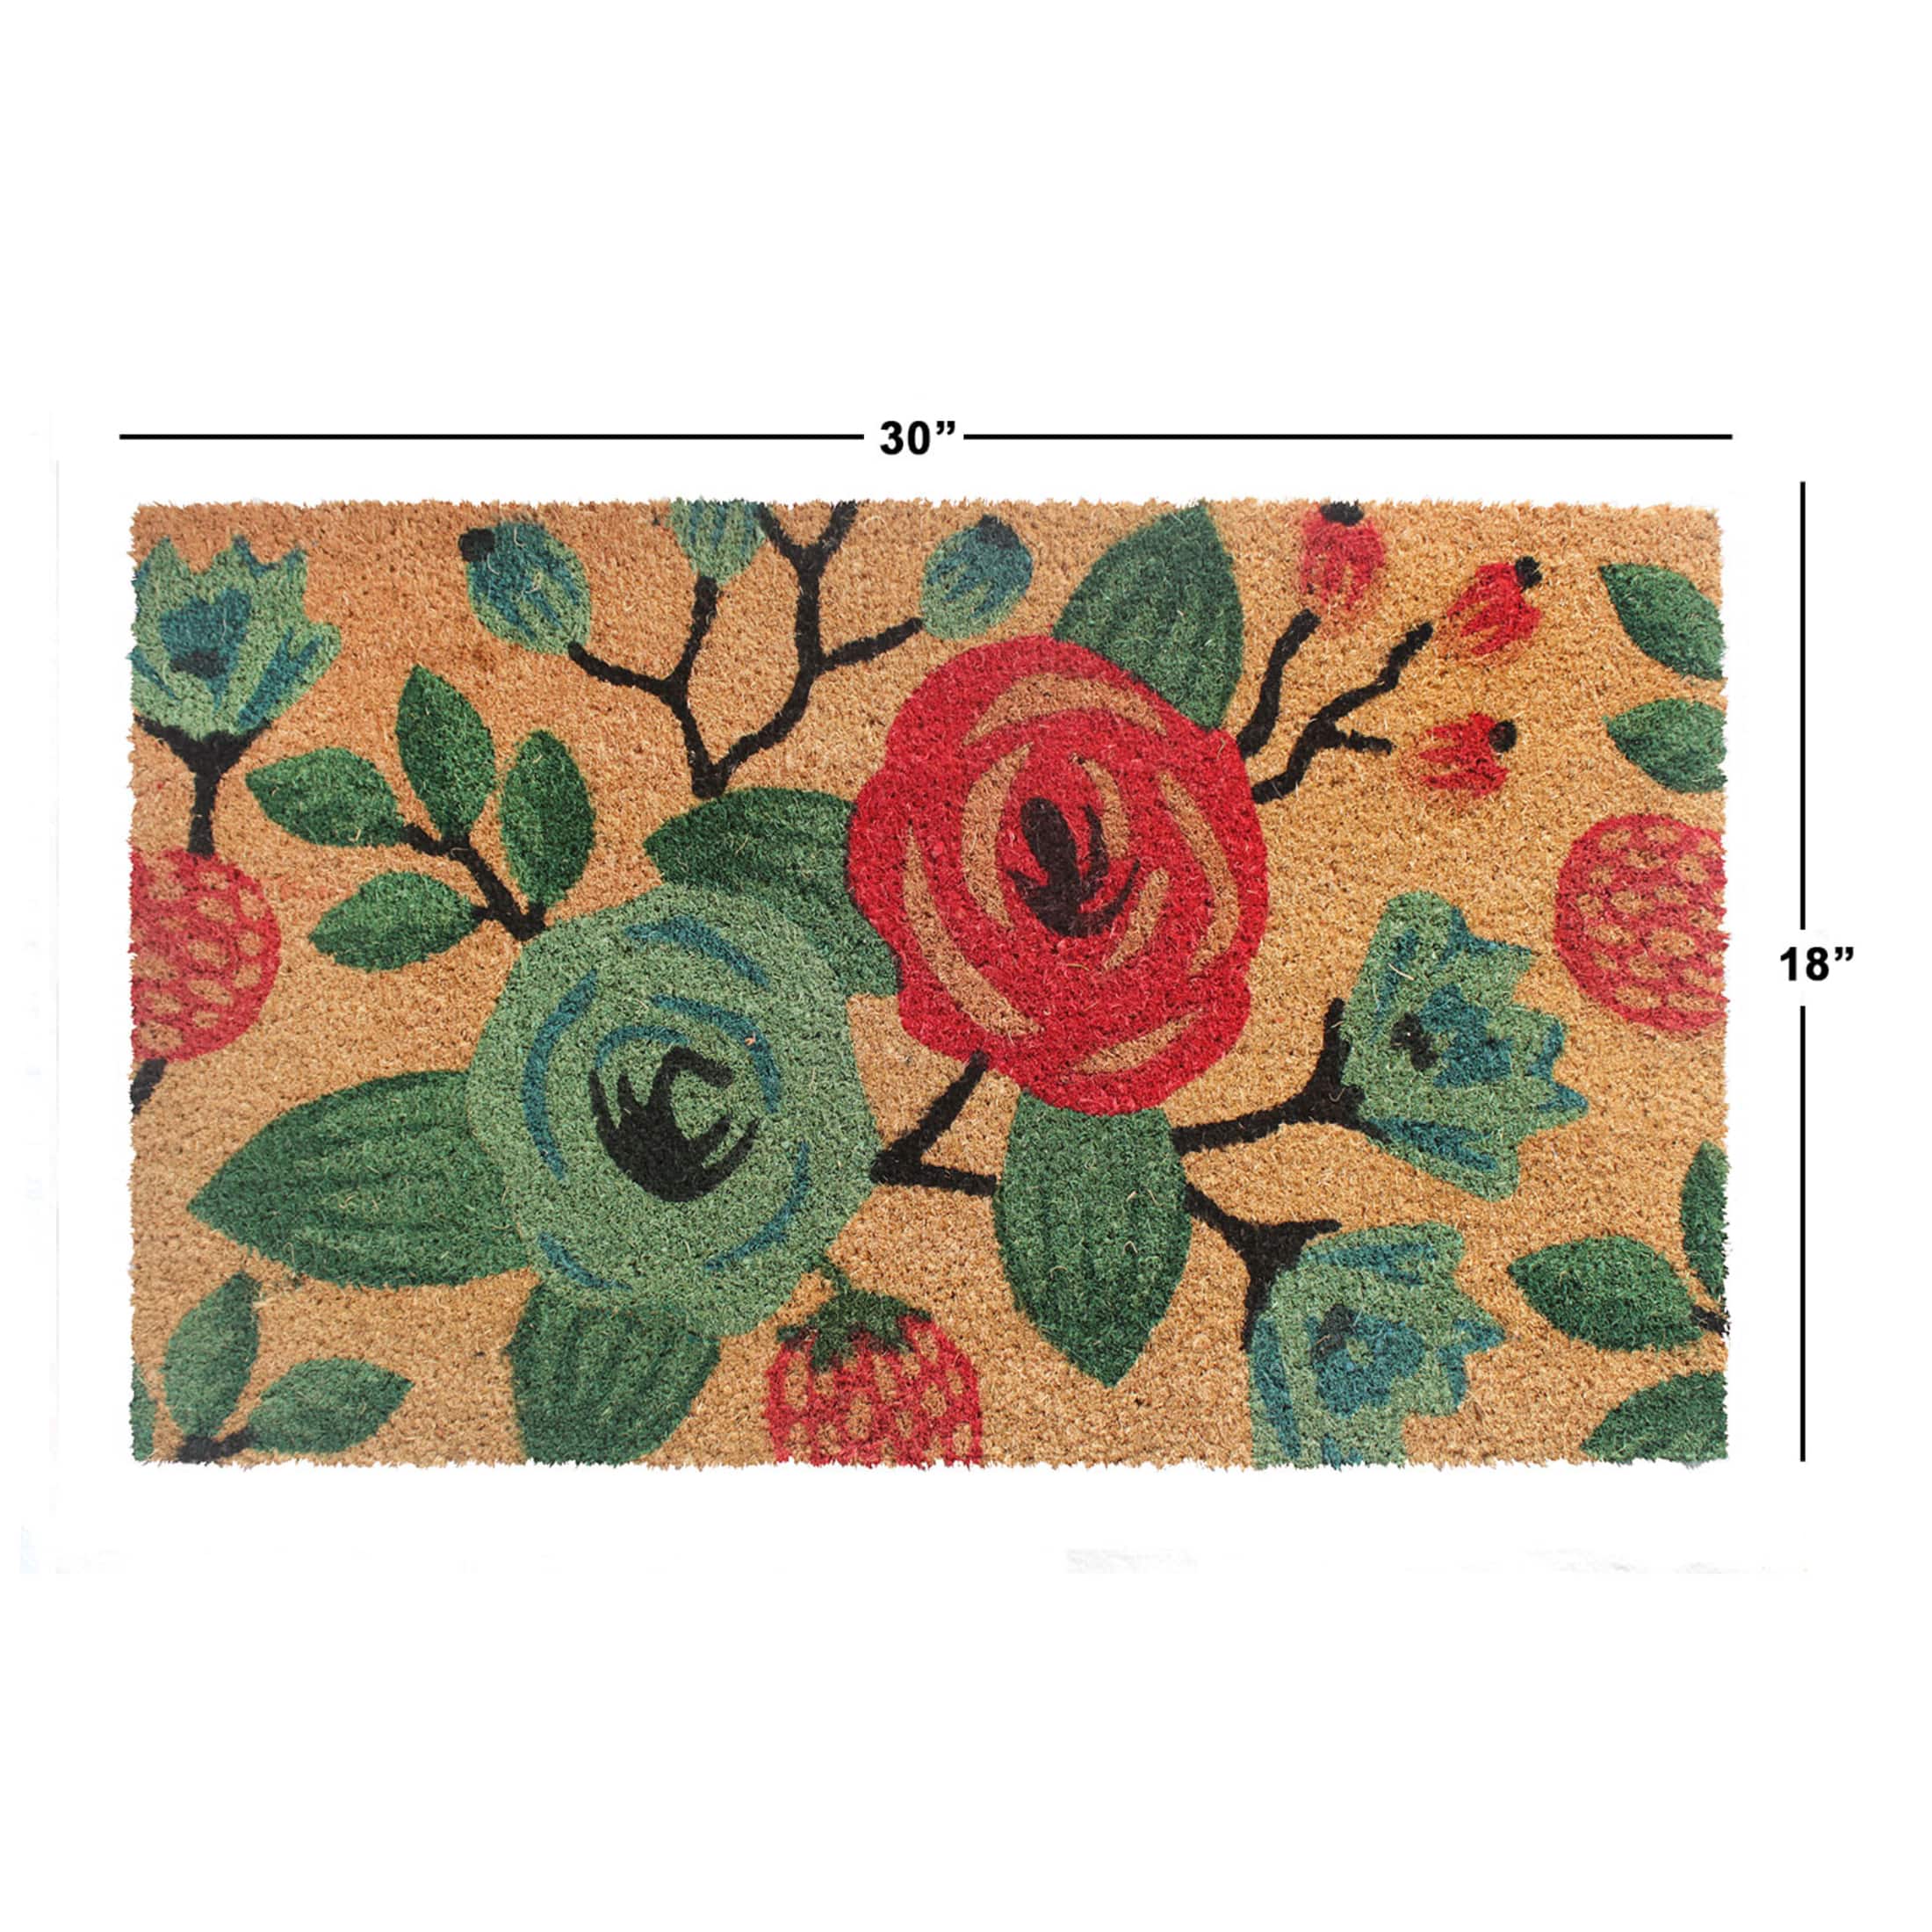 RugSmith Multicolor Machine Tufted Roses Doormat